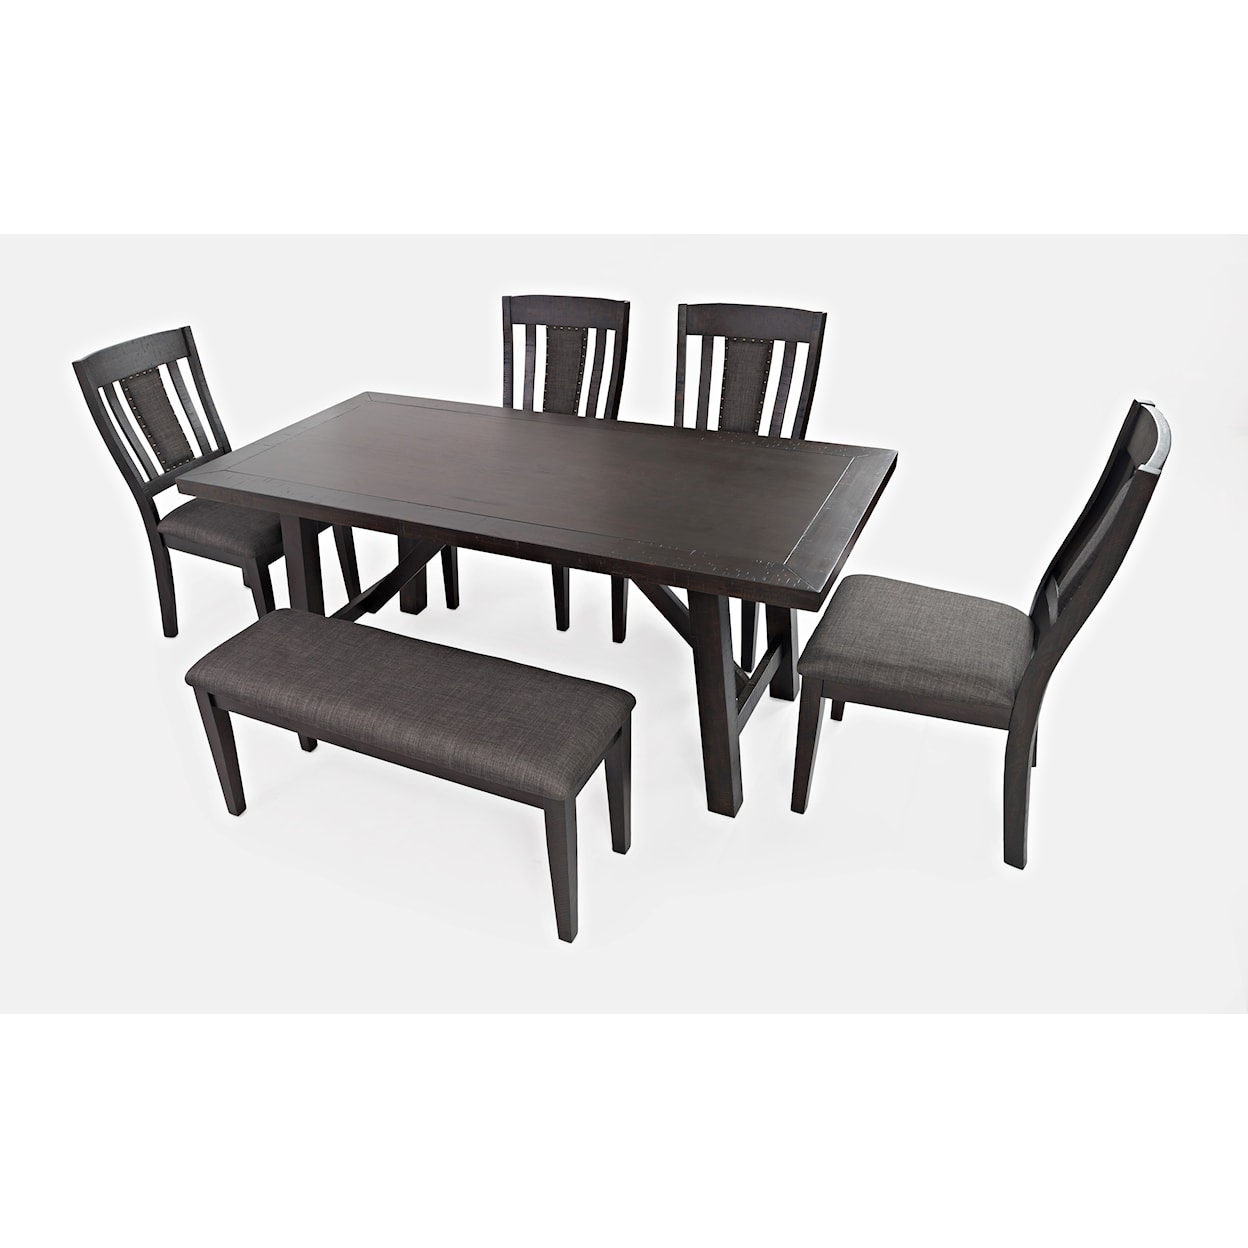 VFM Signature American Rustics Table and Chair Set